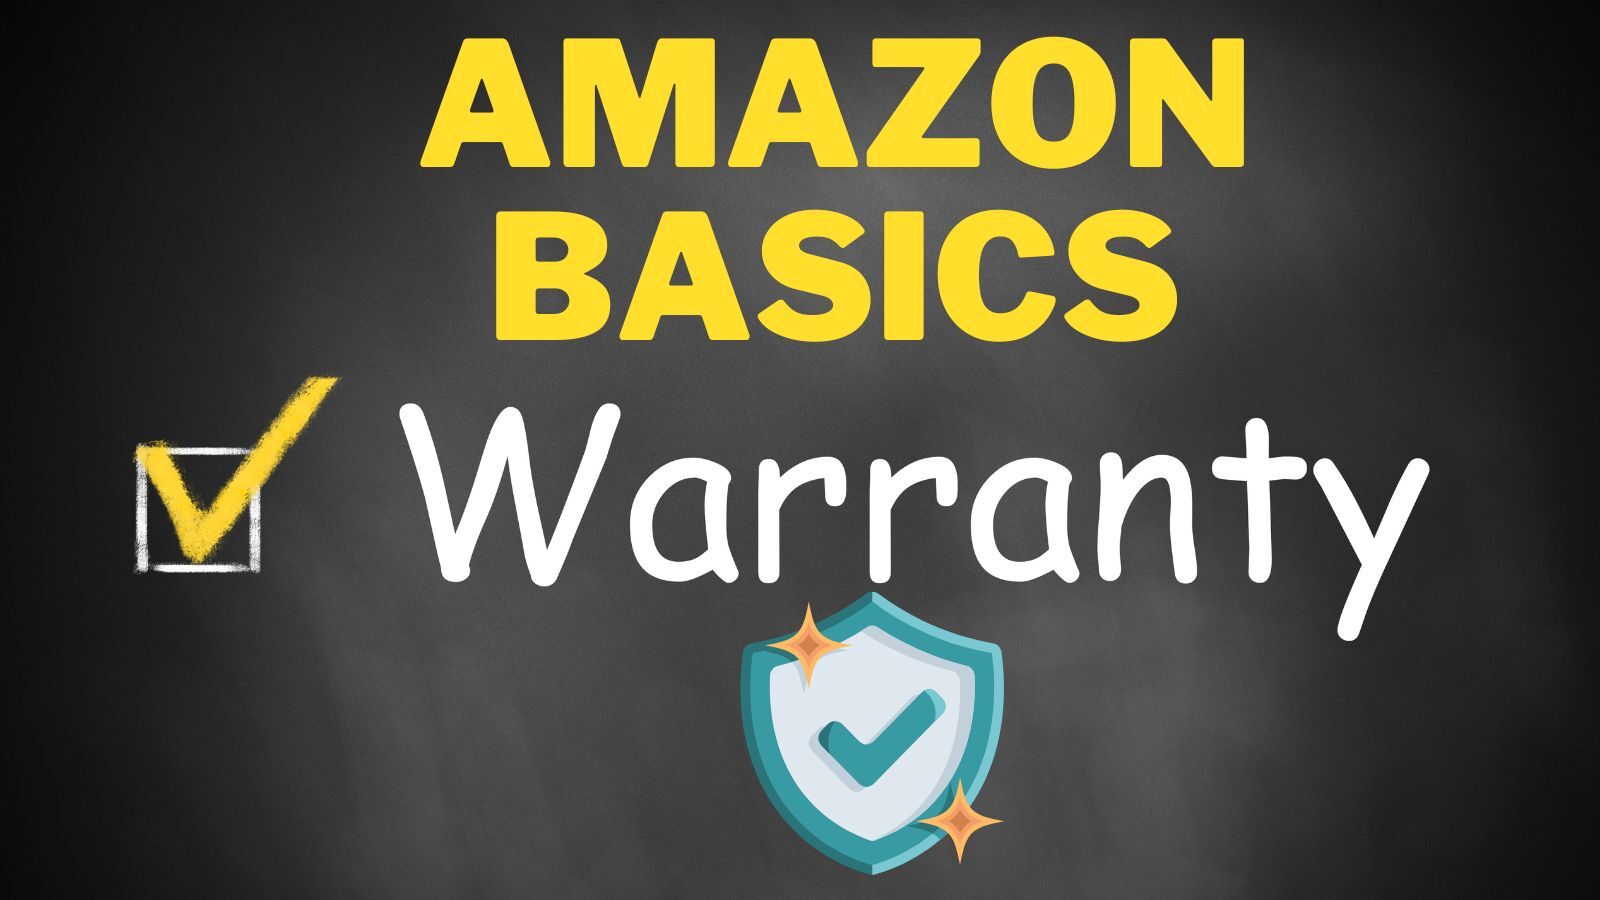 Amazon Basics Warranty (What Should You Know?)